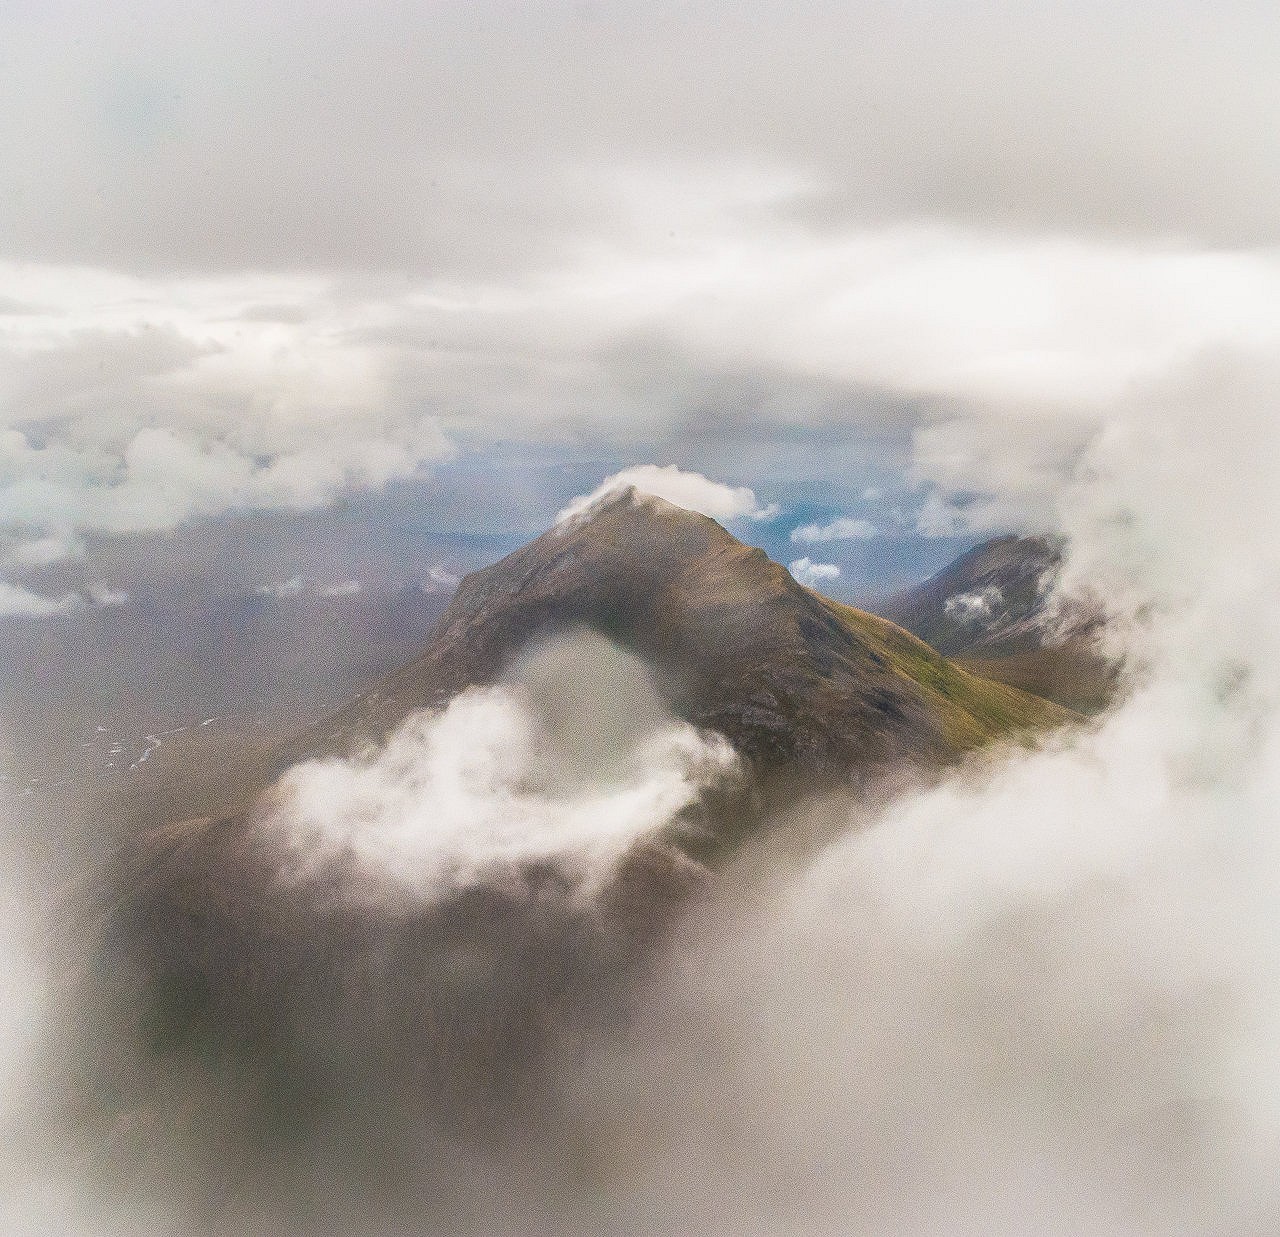 Summit of Marsco peaking through the cloud, From Bla Bheinn  © Karen.Daly